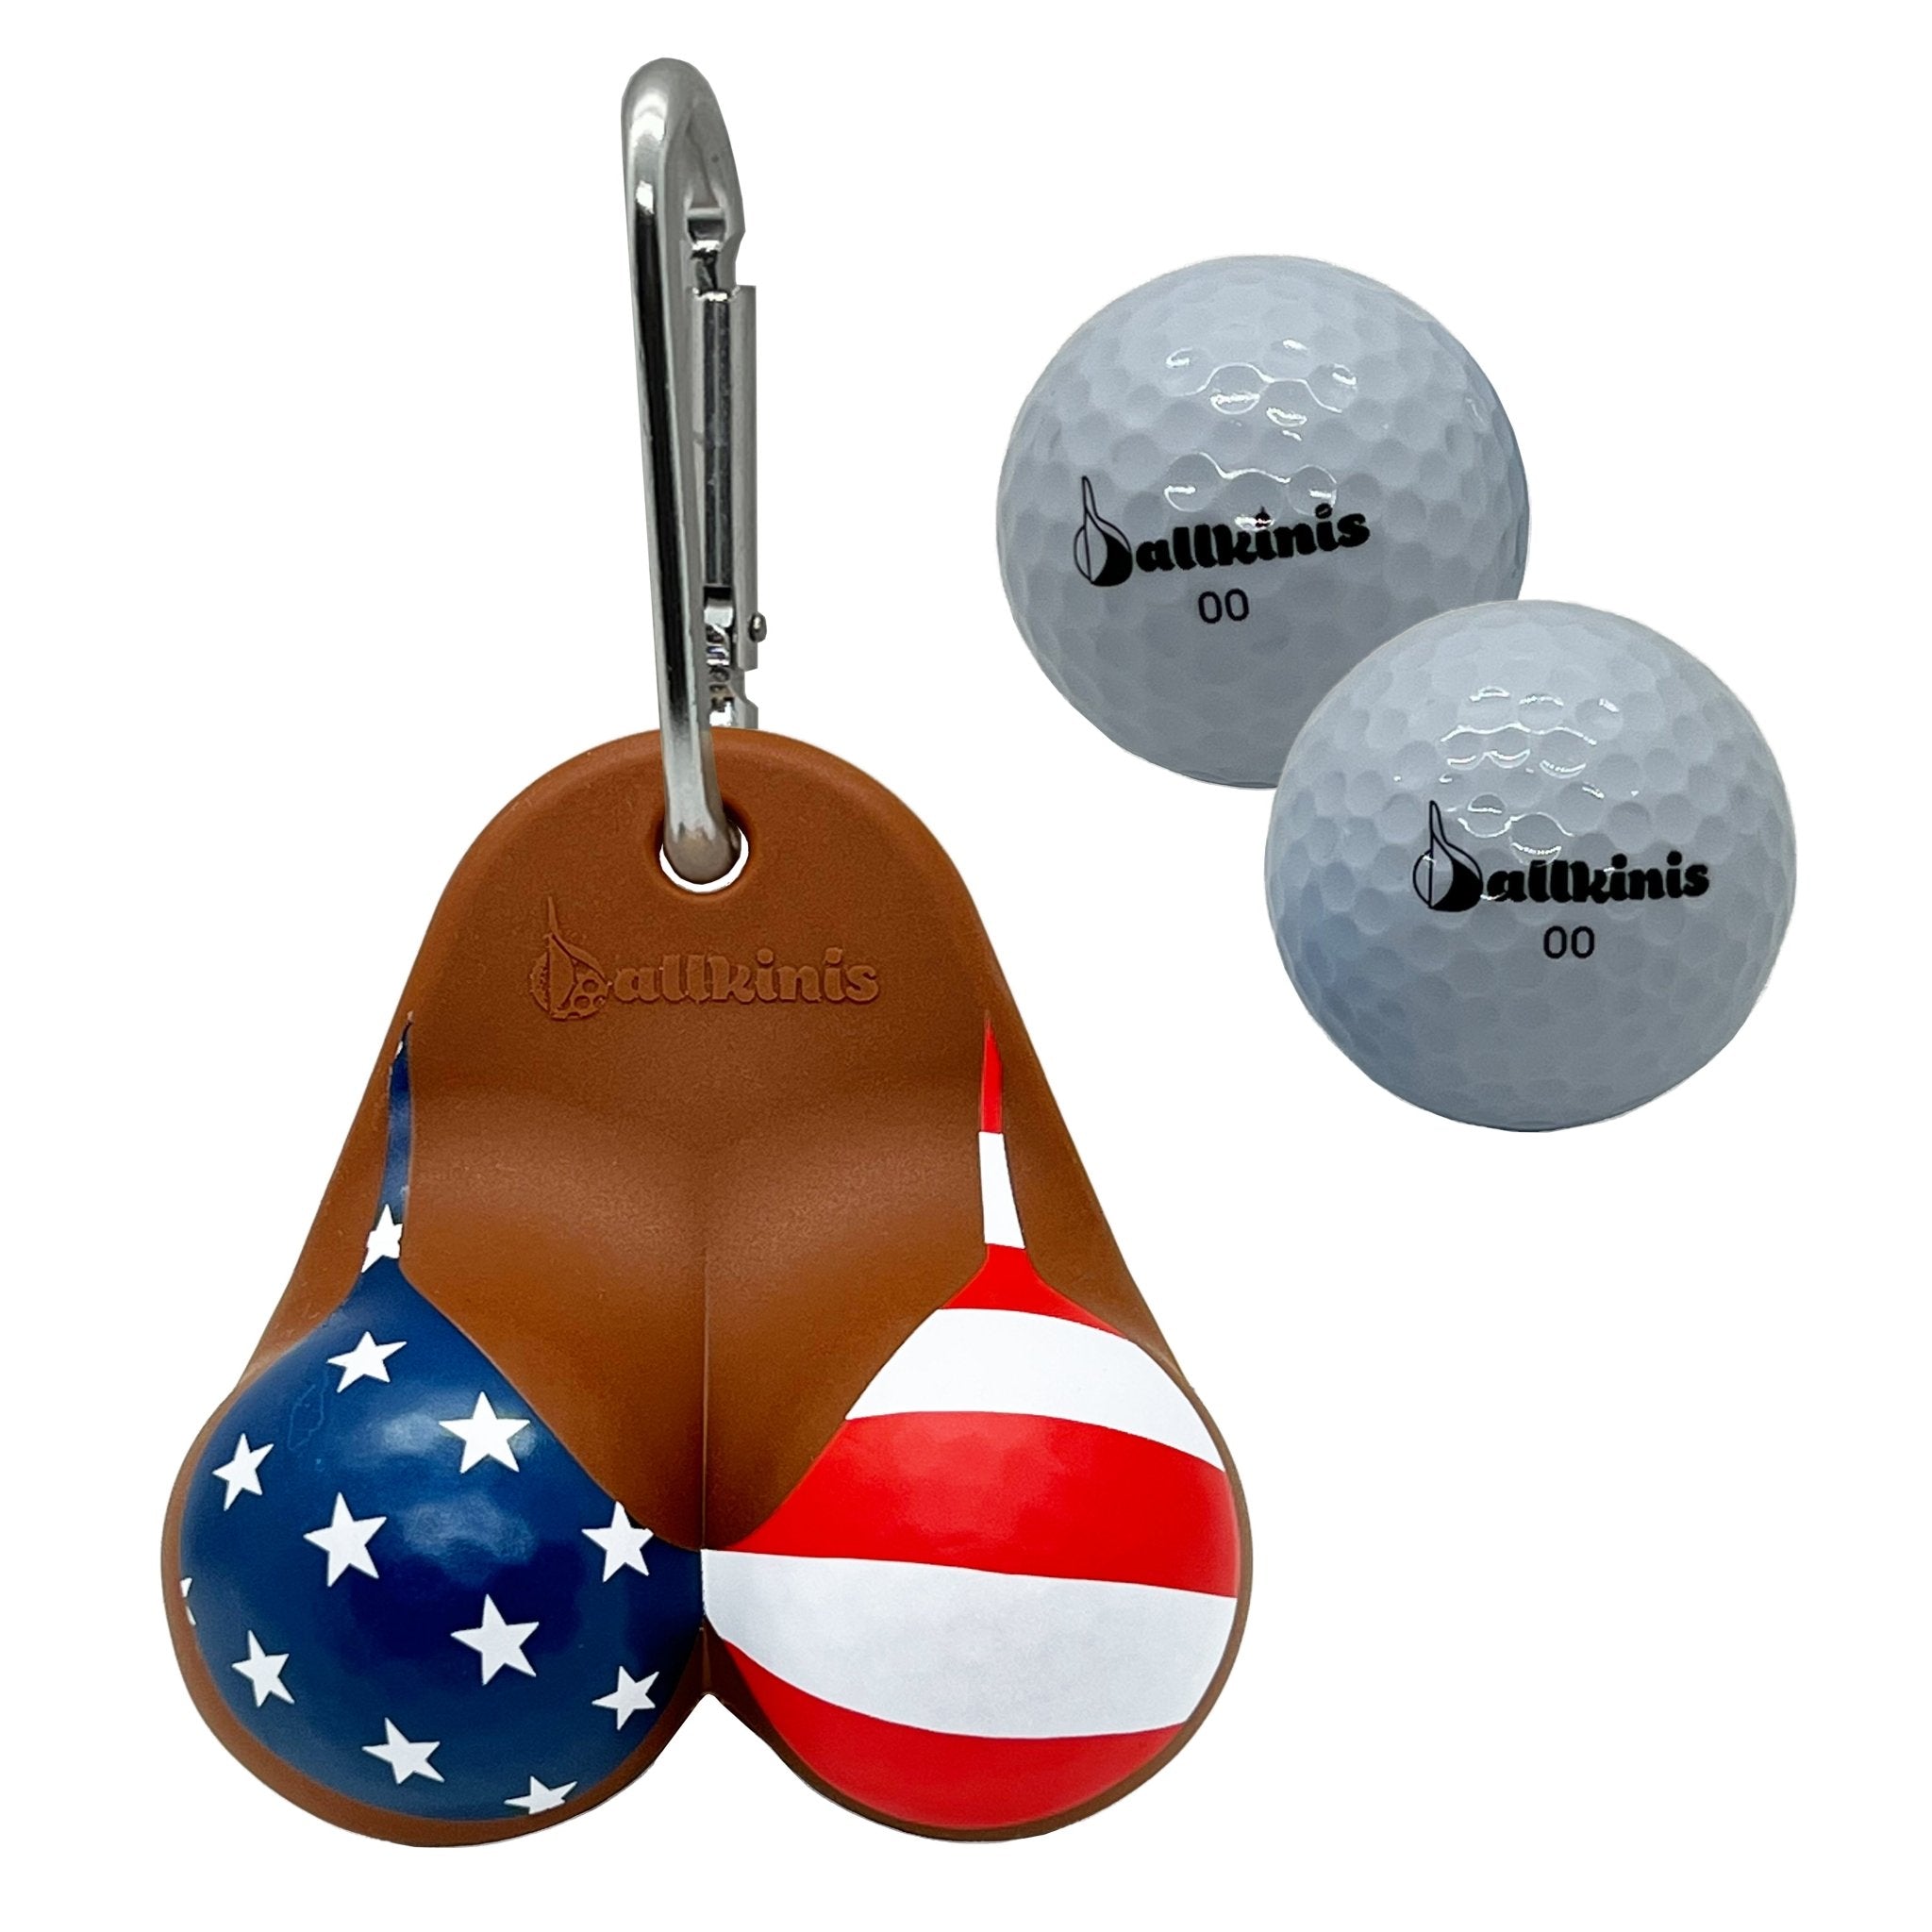 Ballkinis Top USA Bikini Funny Golf Ball Holder Pouch Sack Gift Innovative Souvenirs Club Storage - ballkinis